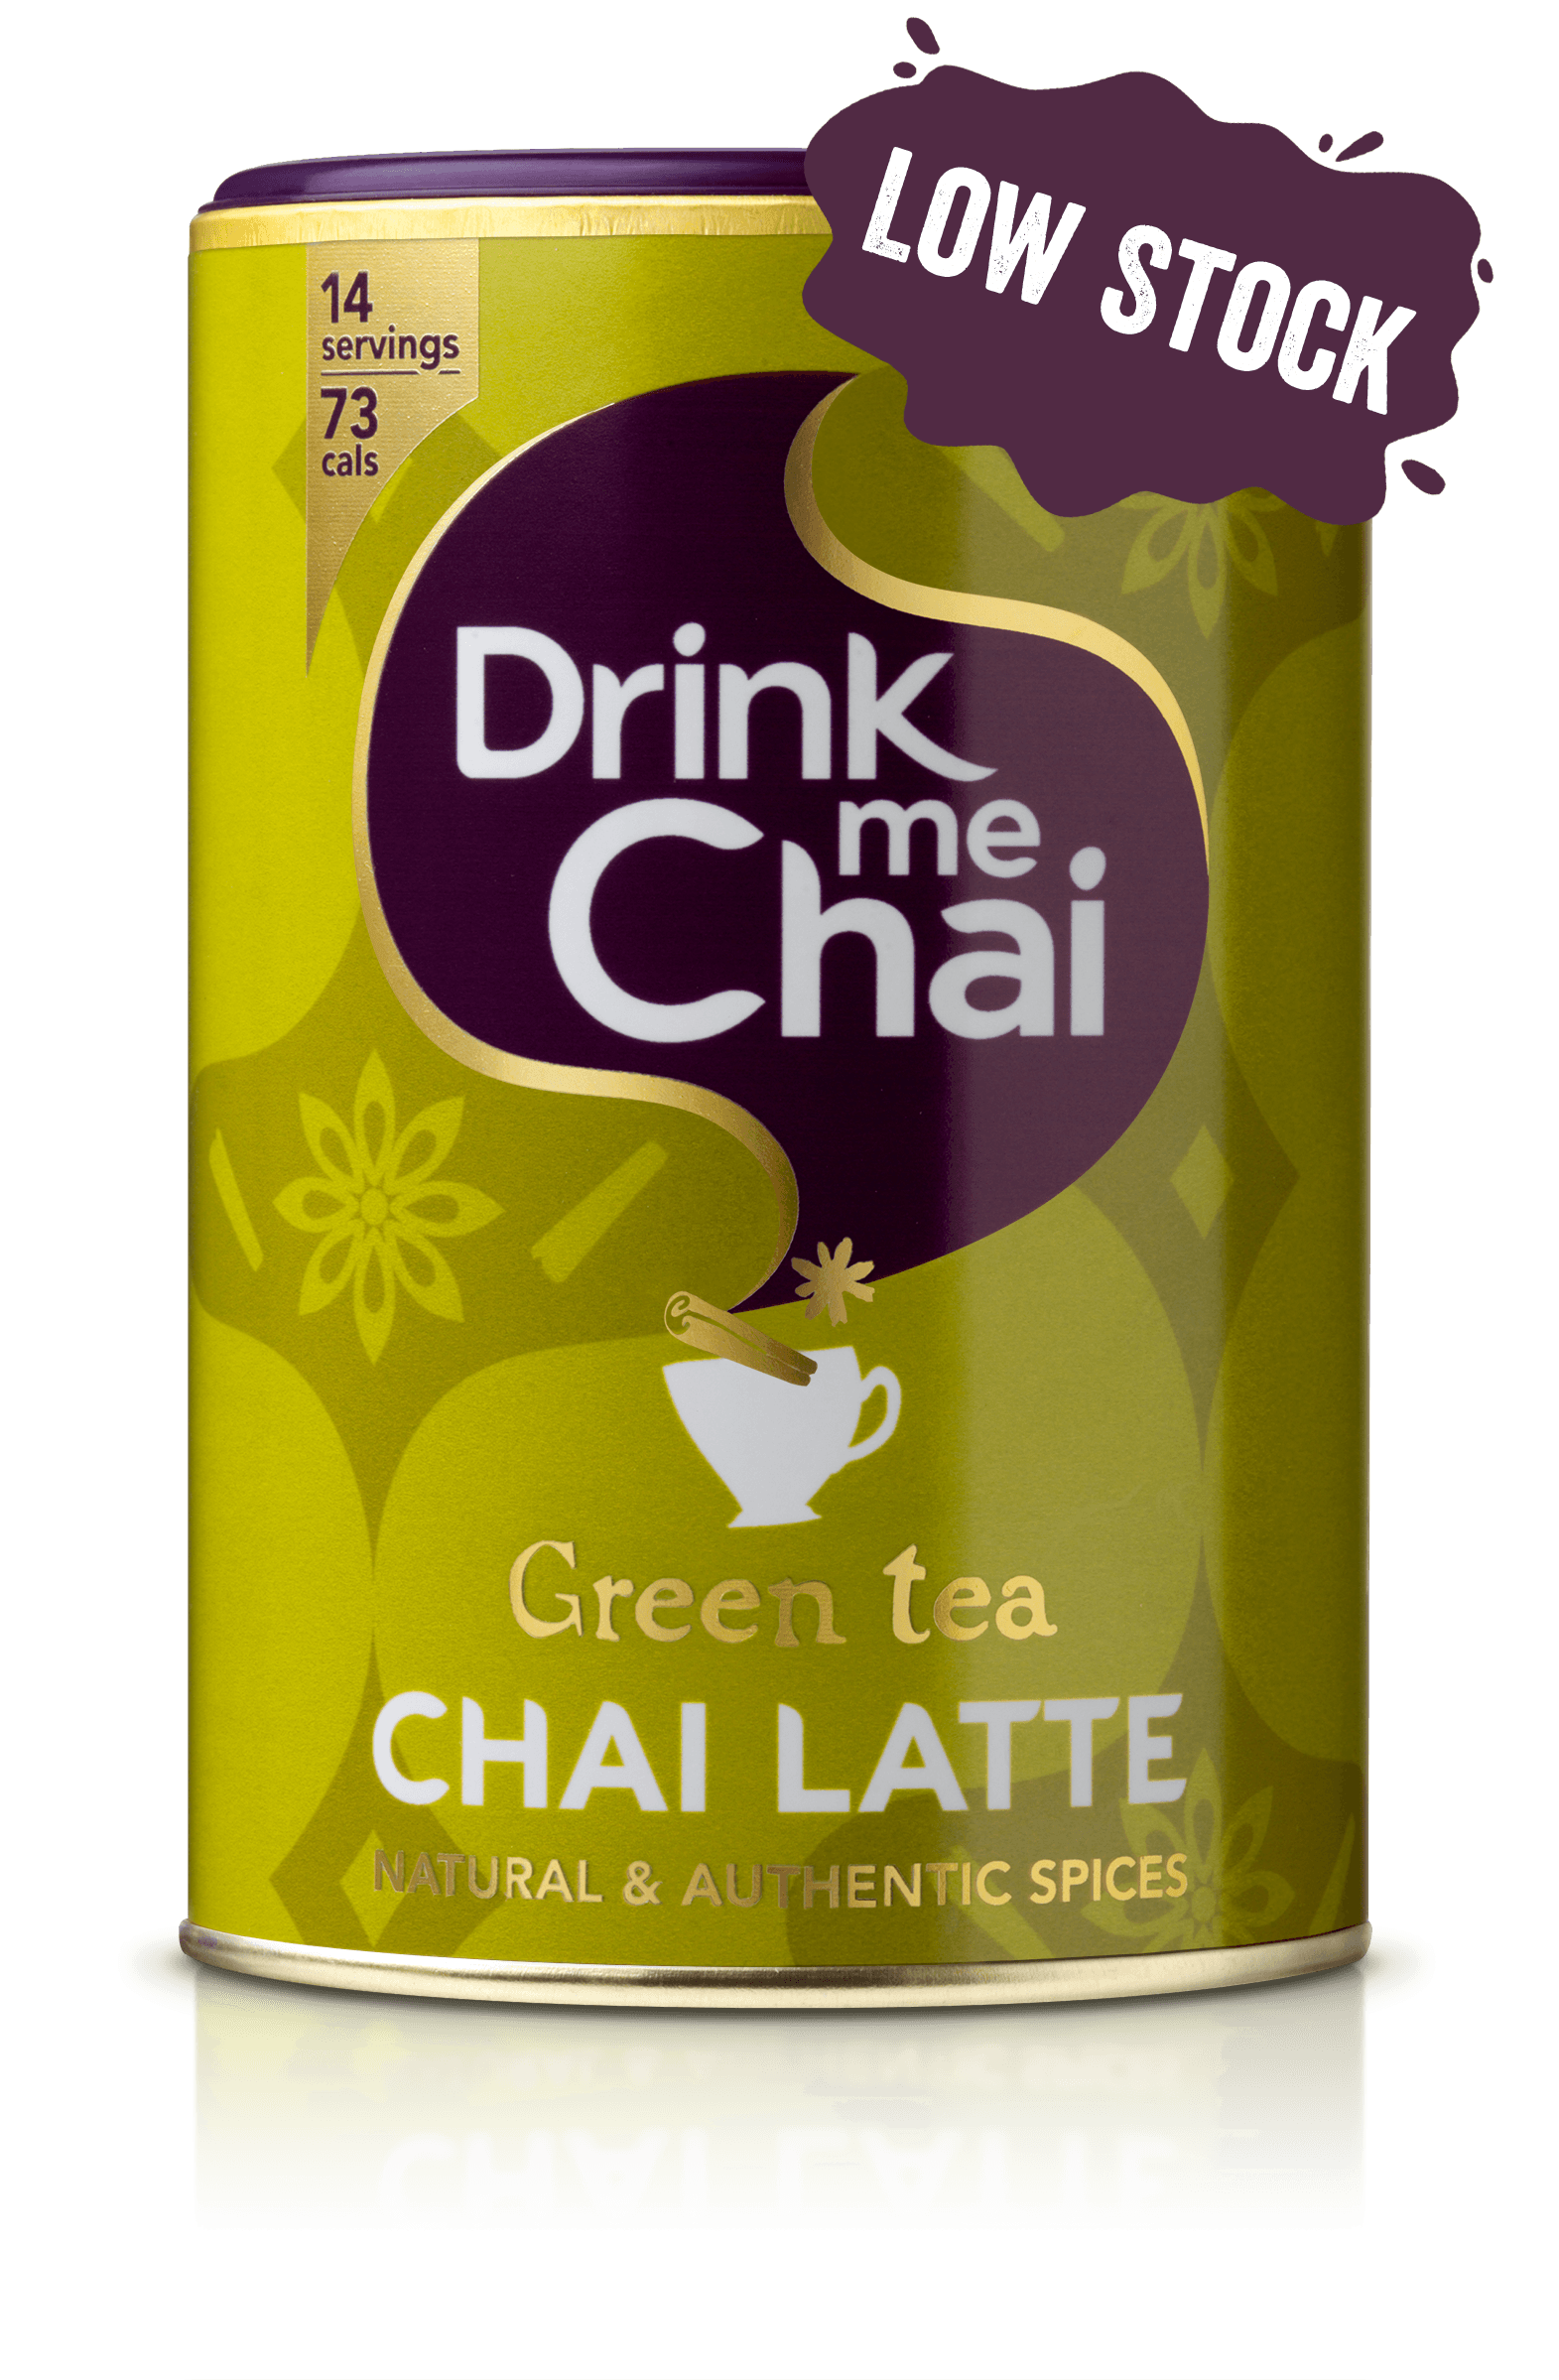 Green and Yellow Drink Logo - Green Tea Chai Latte - Drink me Chai